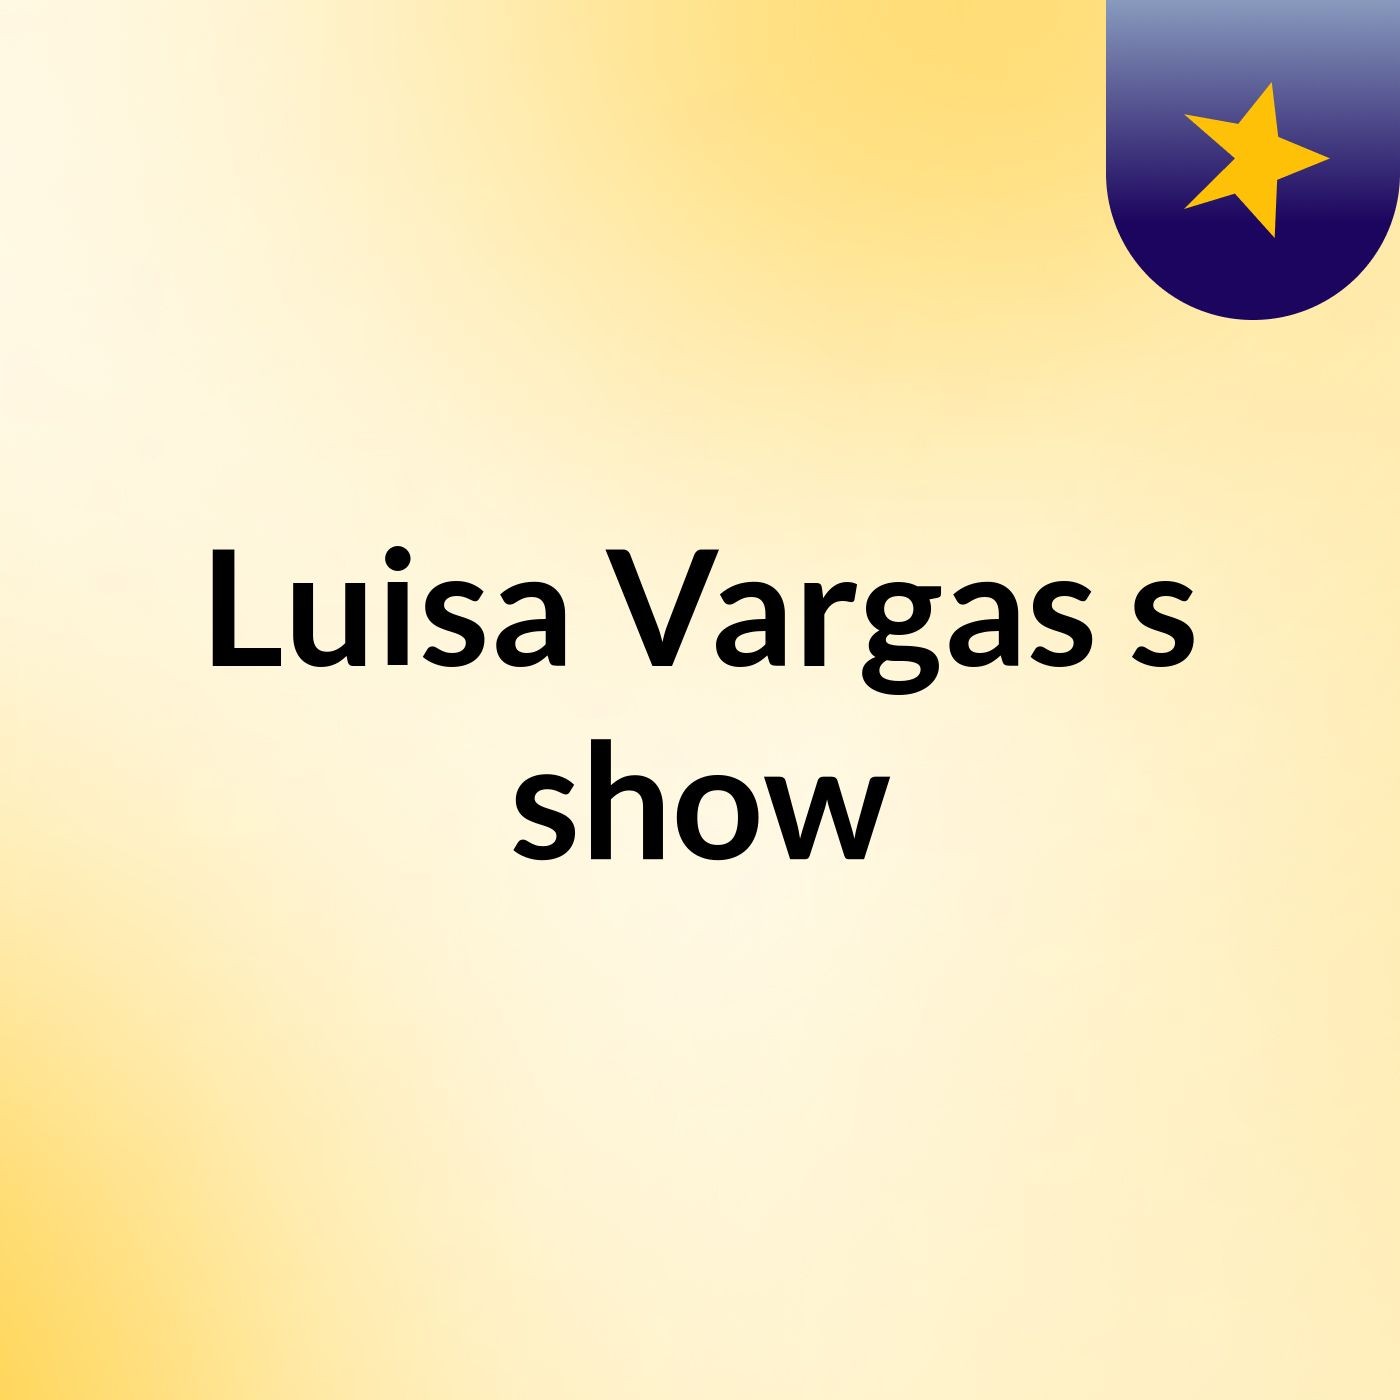 Luisa Vargas's show